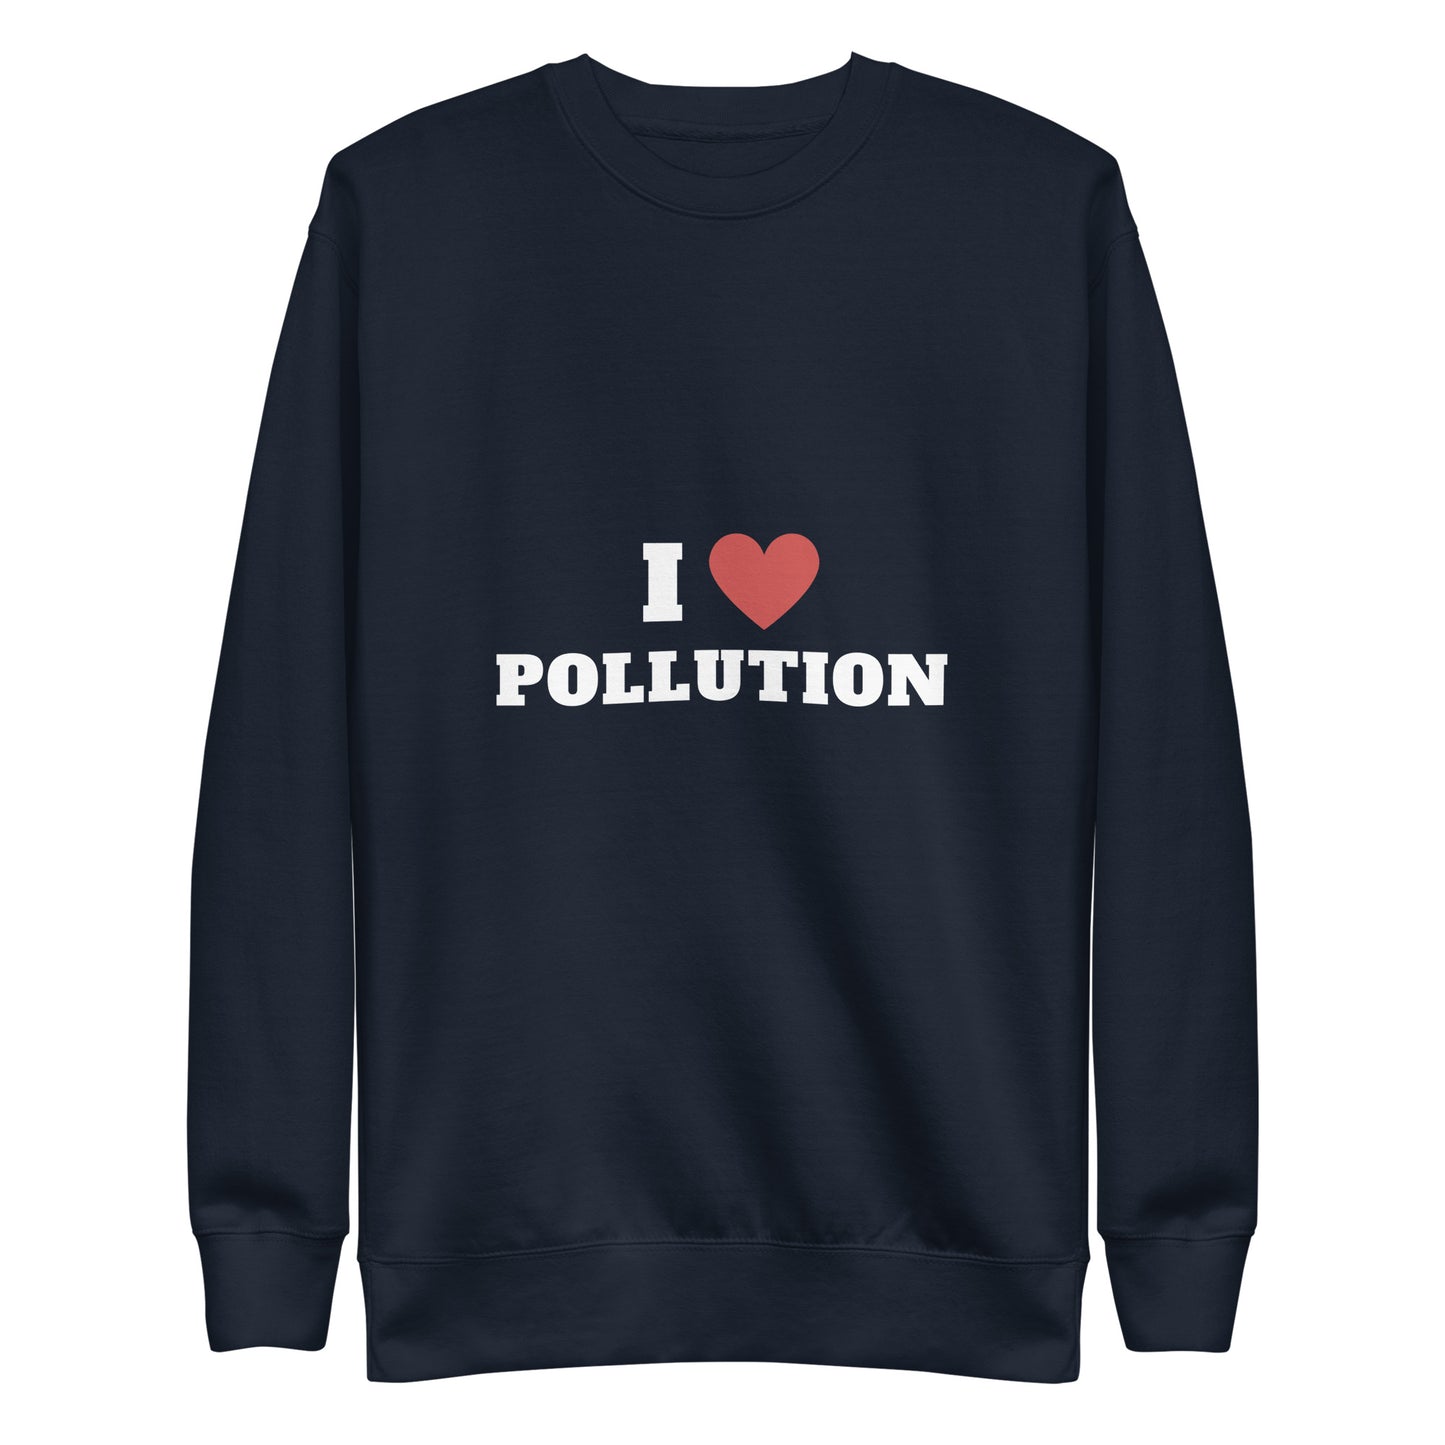 Pollution Sweatshirt